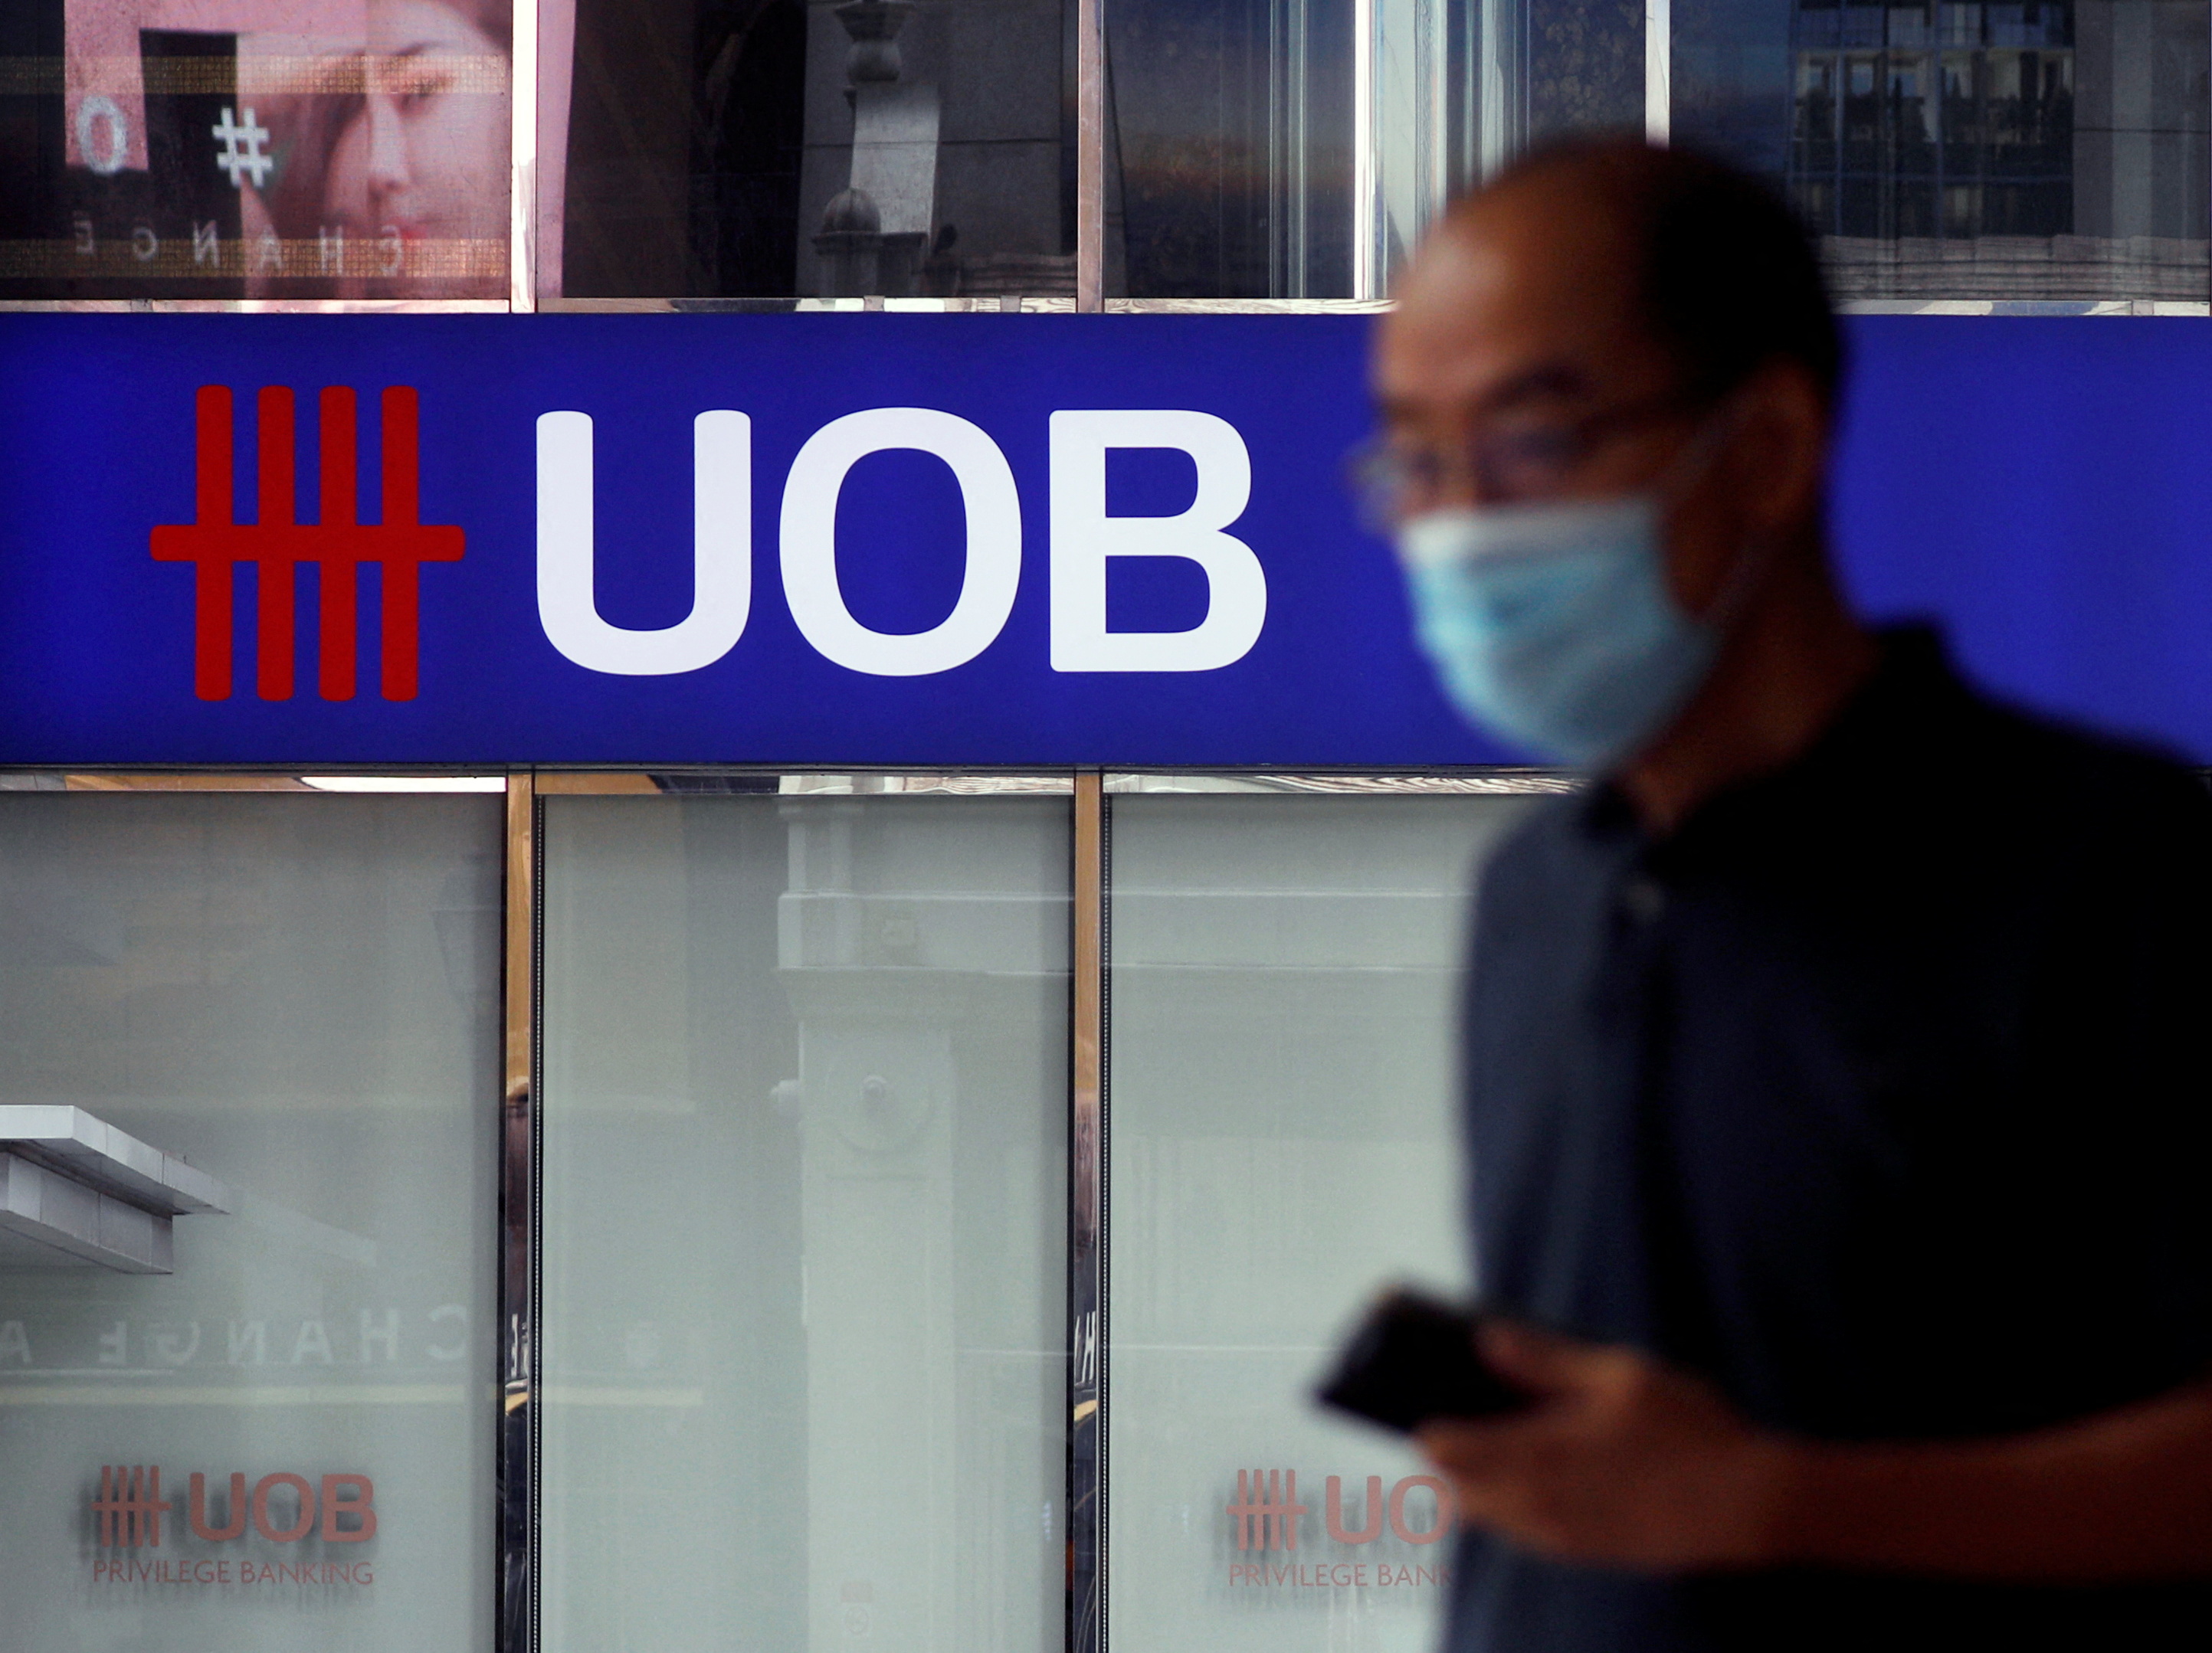 Uob online banking malaysia